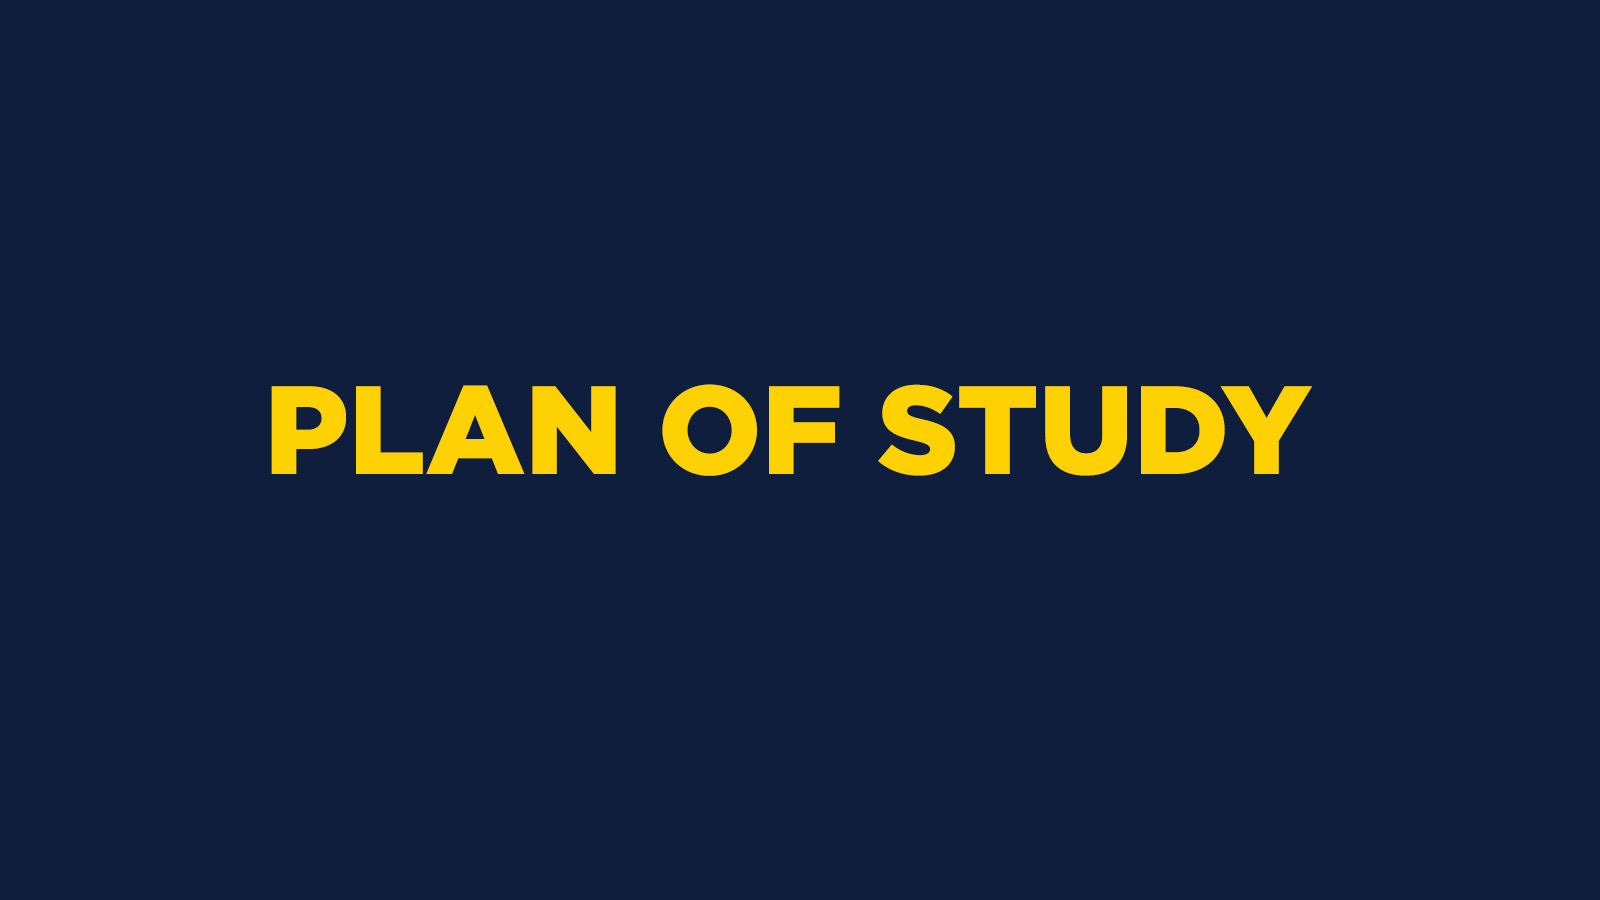 PLAN OF STUDY